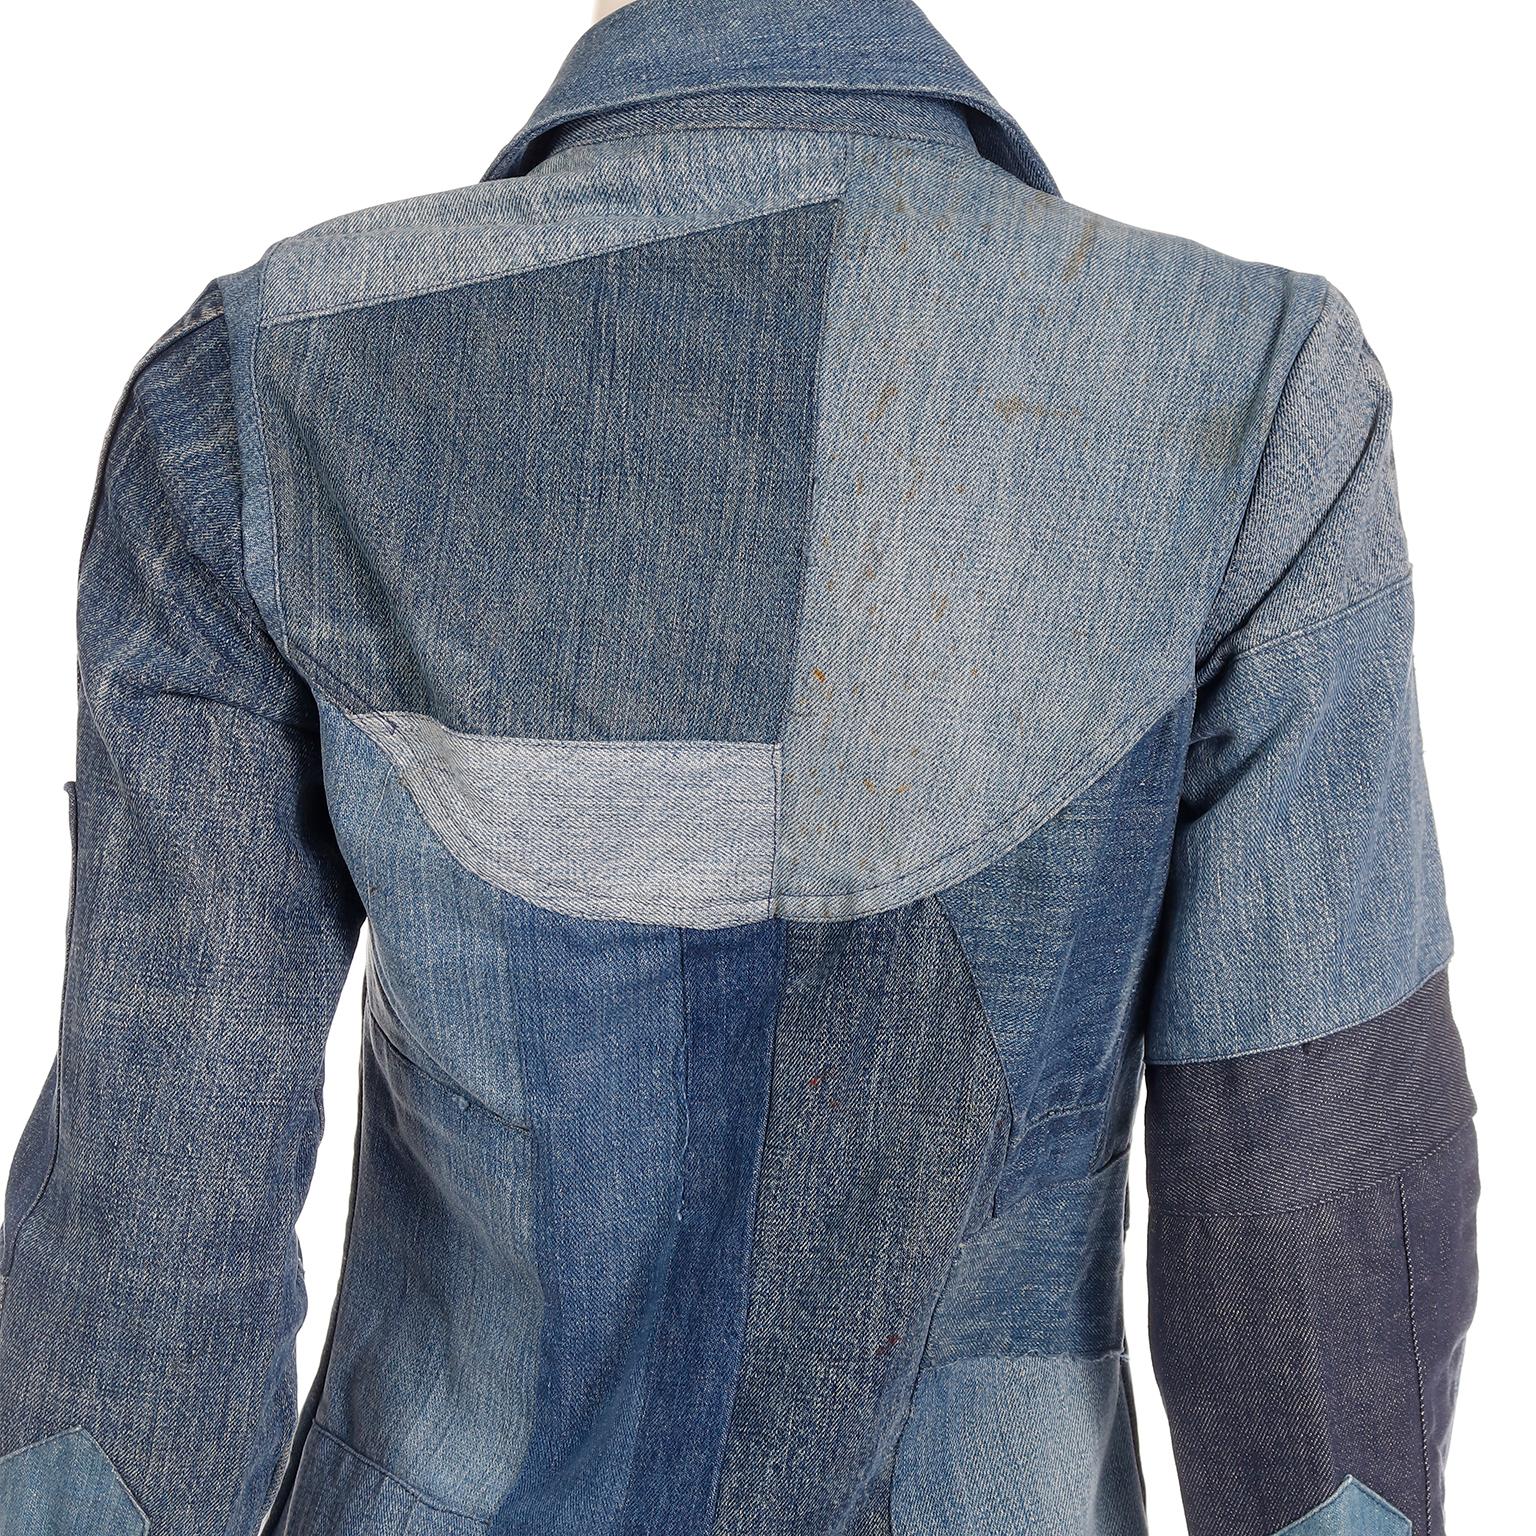 Simis Vintage 1970s Patchwork Denim Jeans and Button Front Shirt 2 Pc Outfit 6